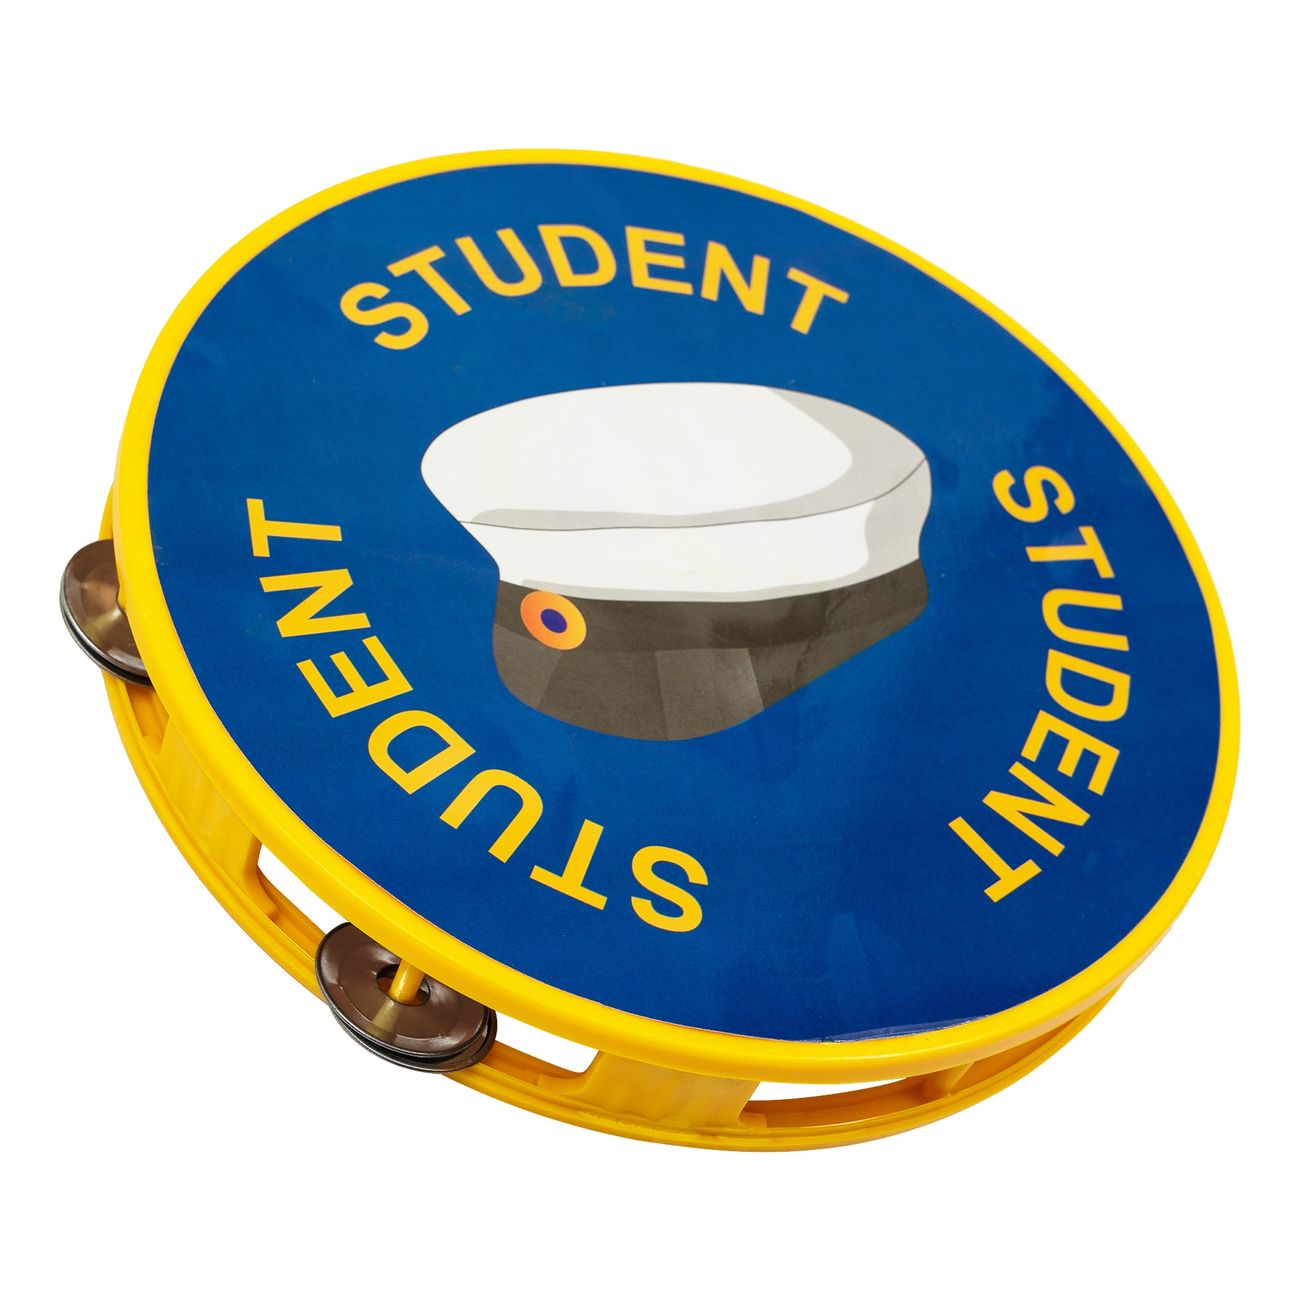 tamburin-student-92737-1